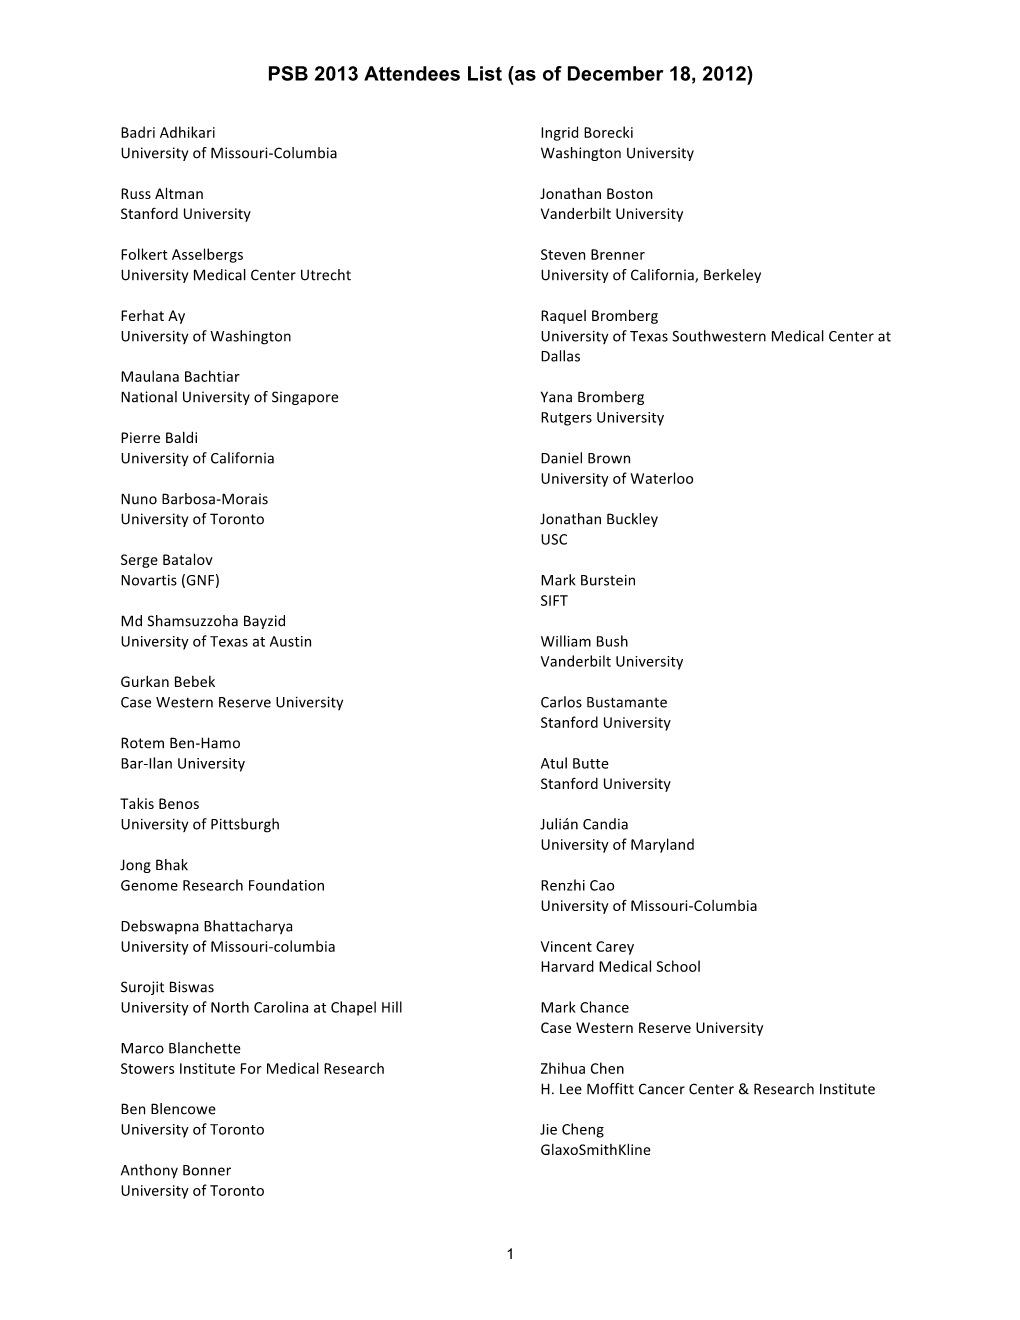 Attendees List (As of December 18, 2012)